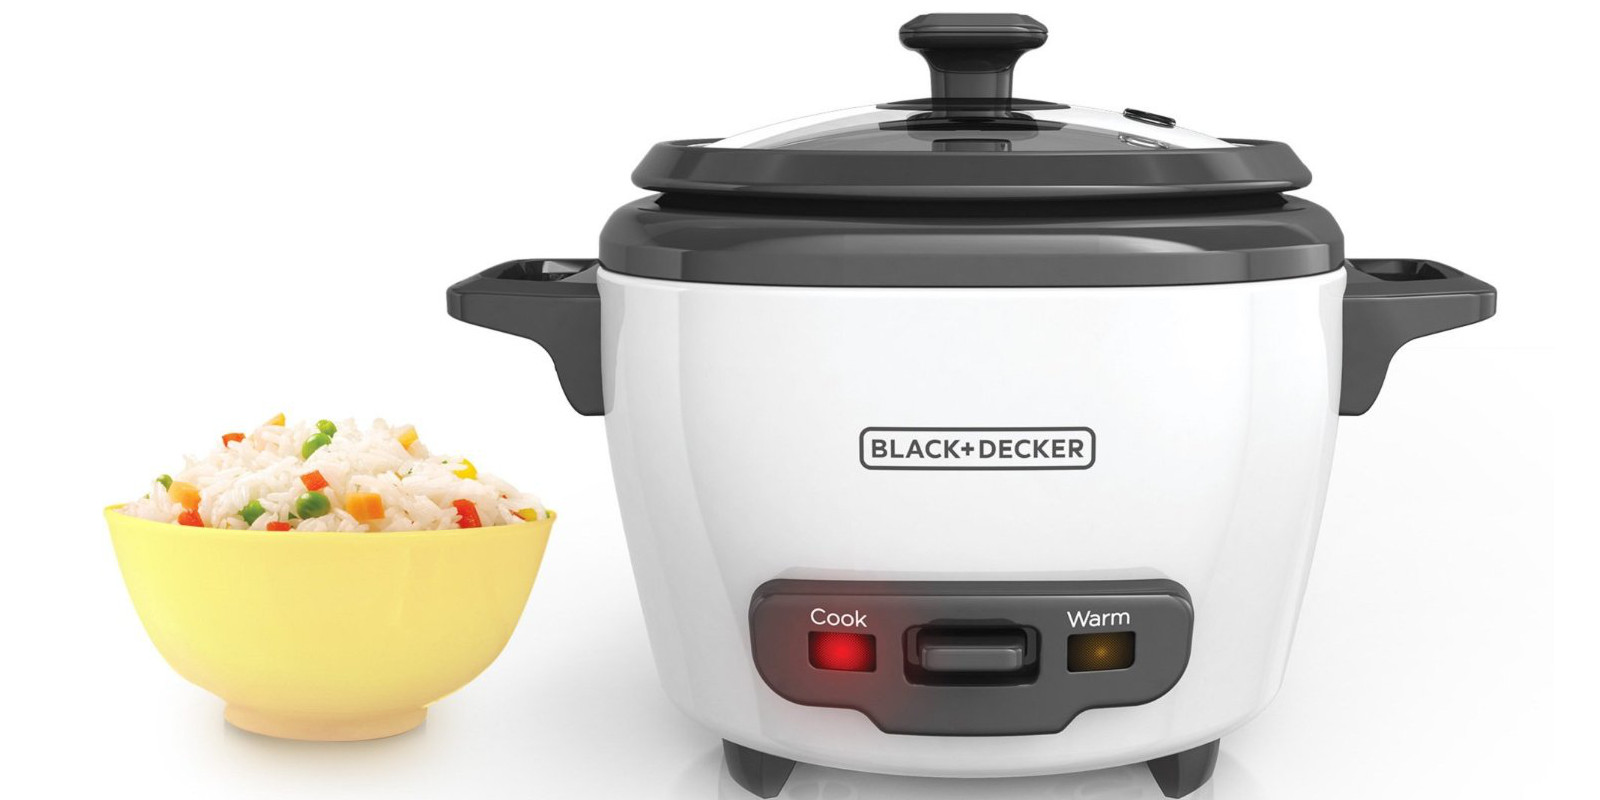 Black+Decker Mini Rice/Food Cooker for under $15 Prime shipped (Reg. $20+),  more